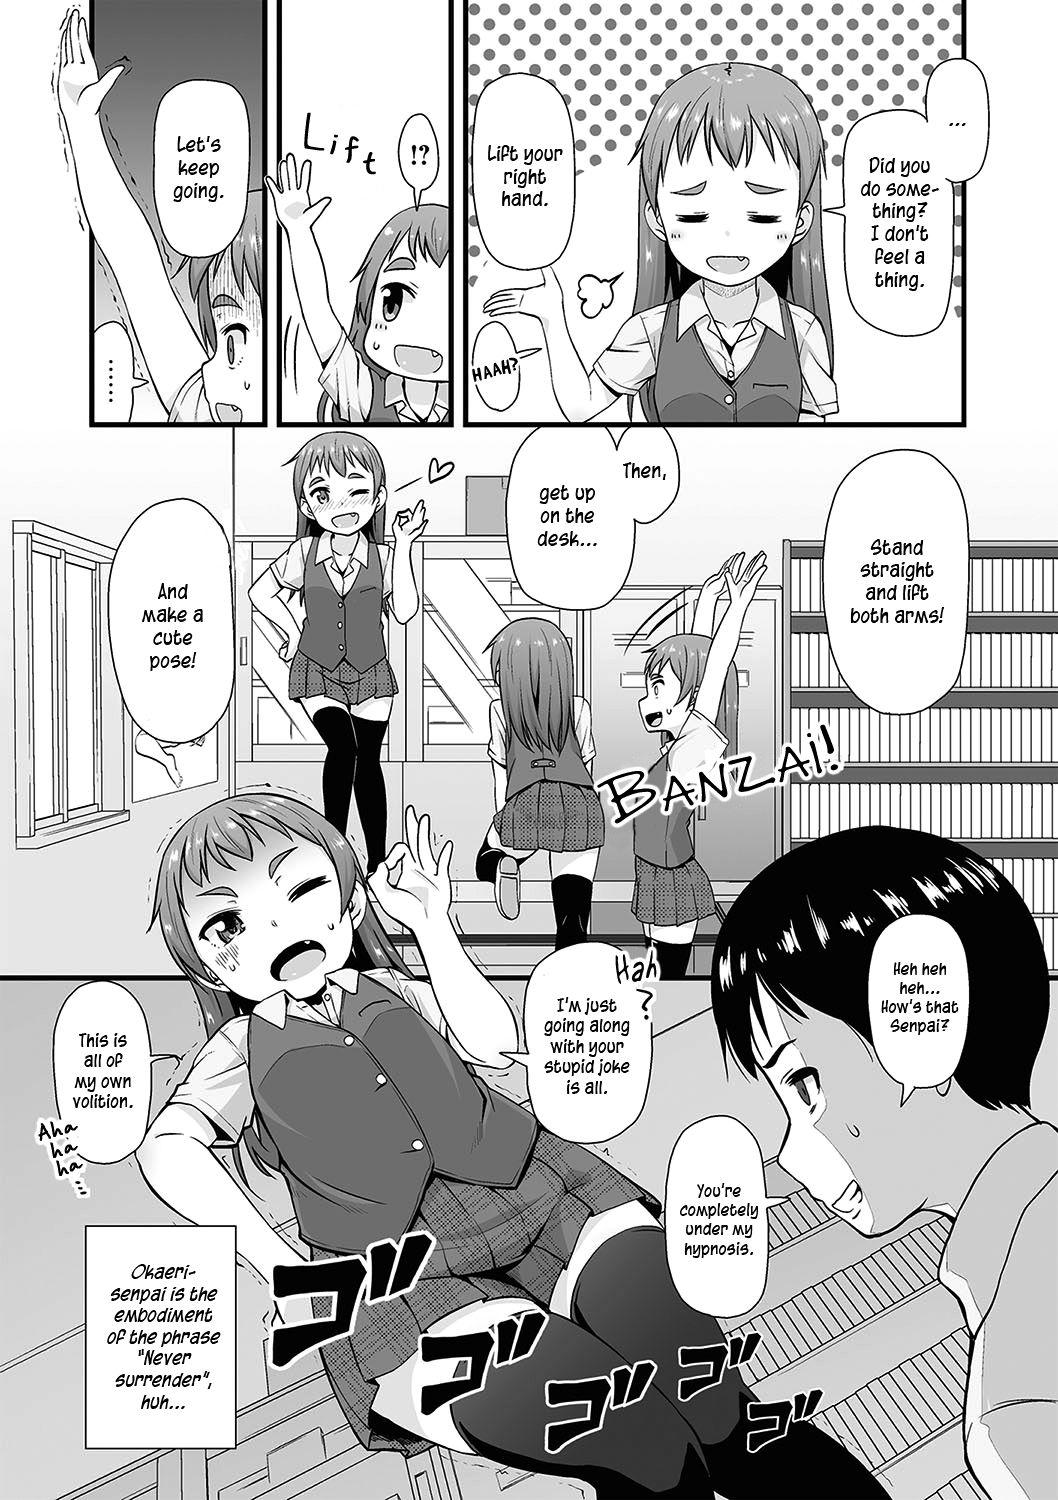 Manga Club Activity Log 5